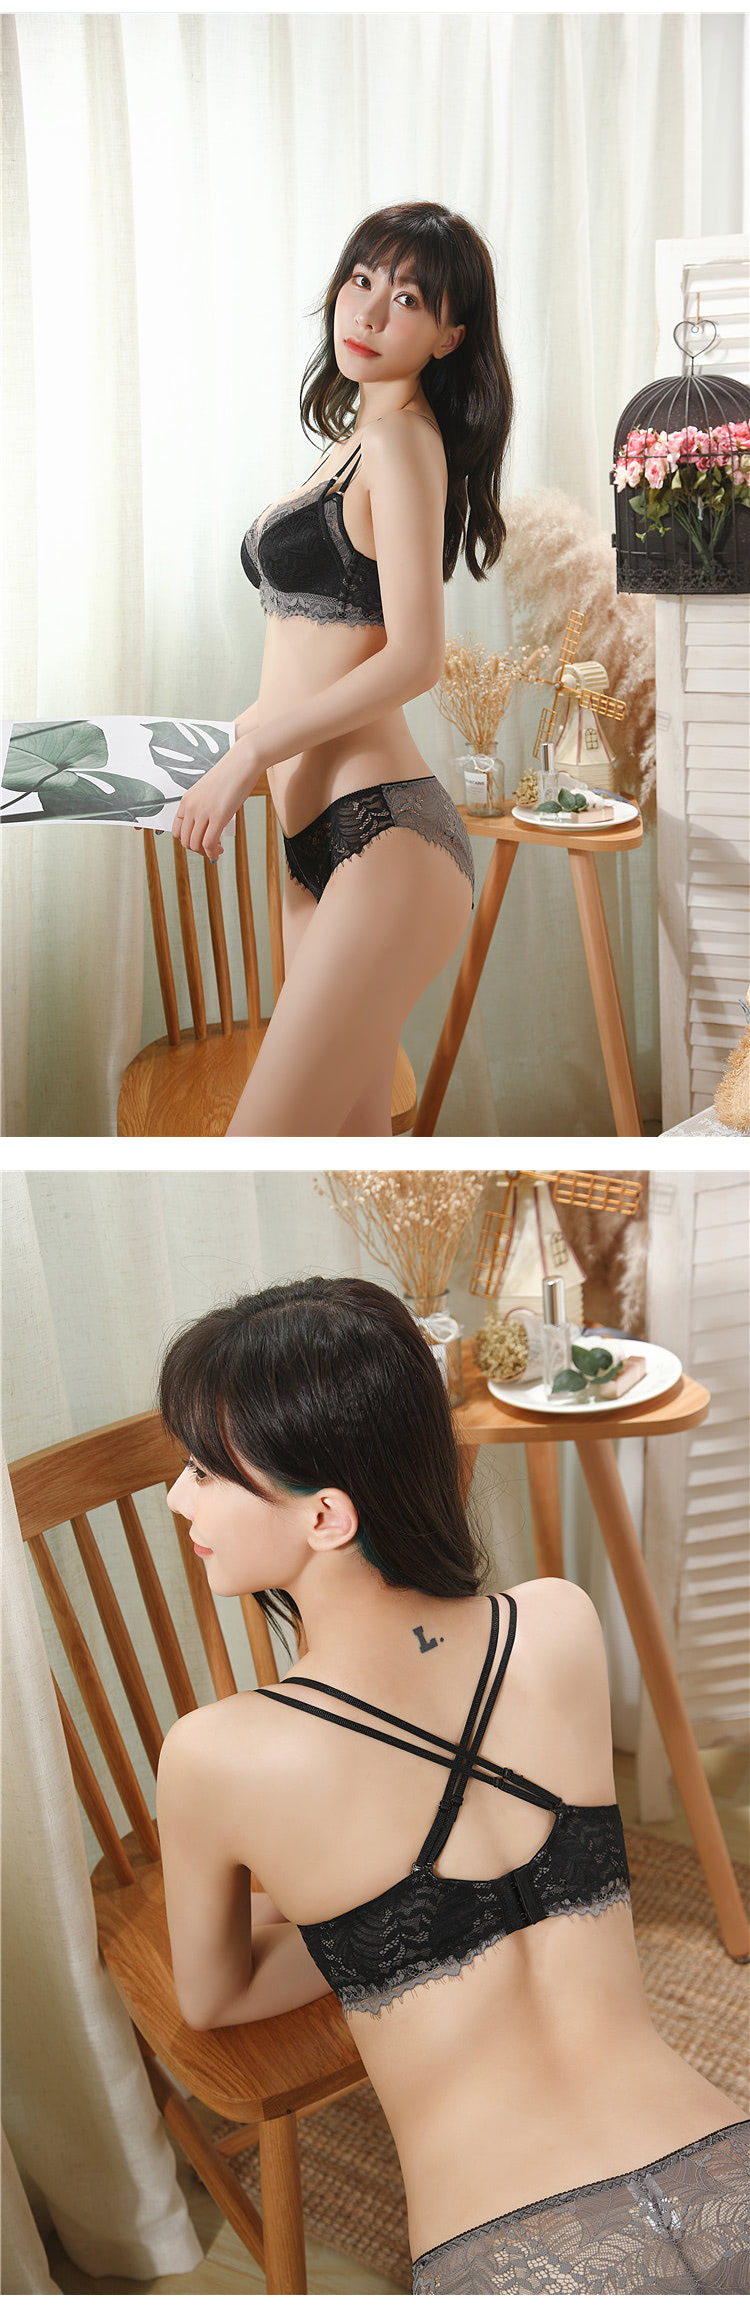 Sexy-Beautiful-Lingerie-Set-Lace-Underwear-Bra-and-Panty19.jpg